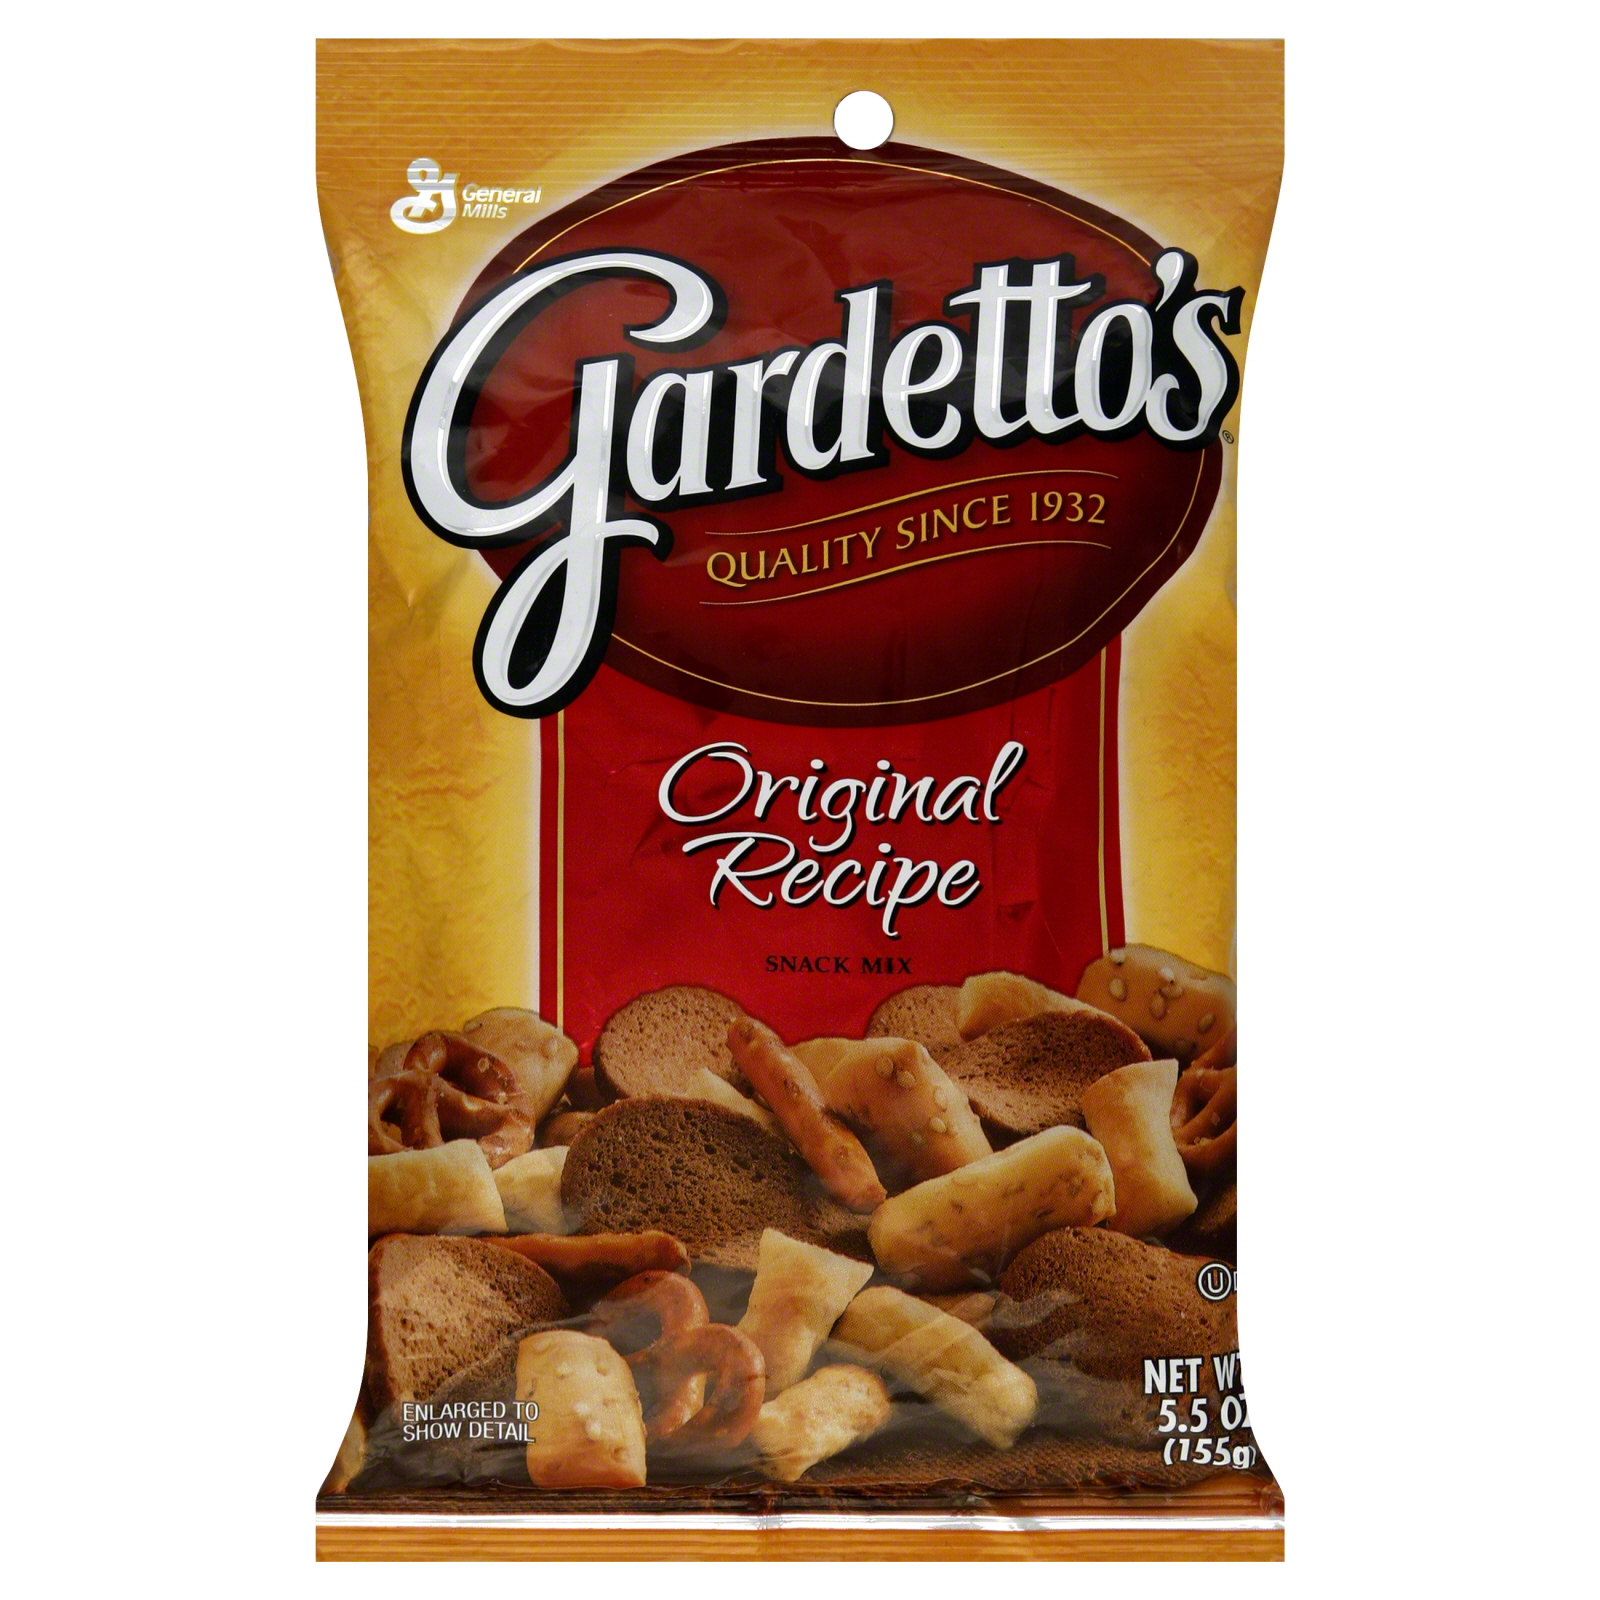 Gardetto's Original Recipe Snack Mix 5.5 oz